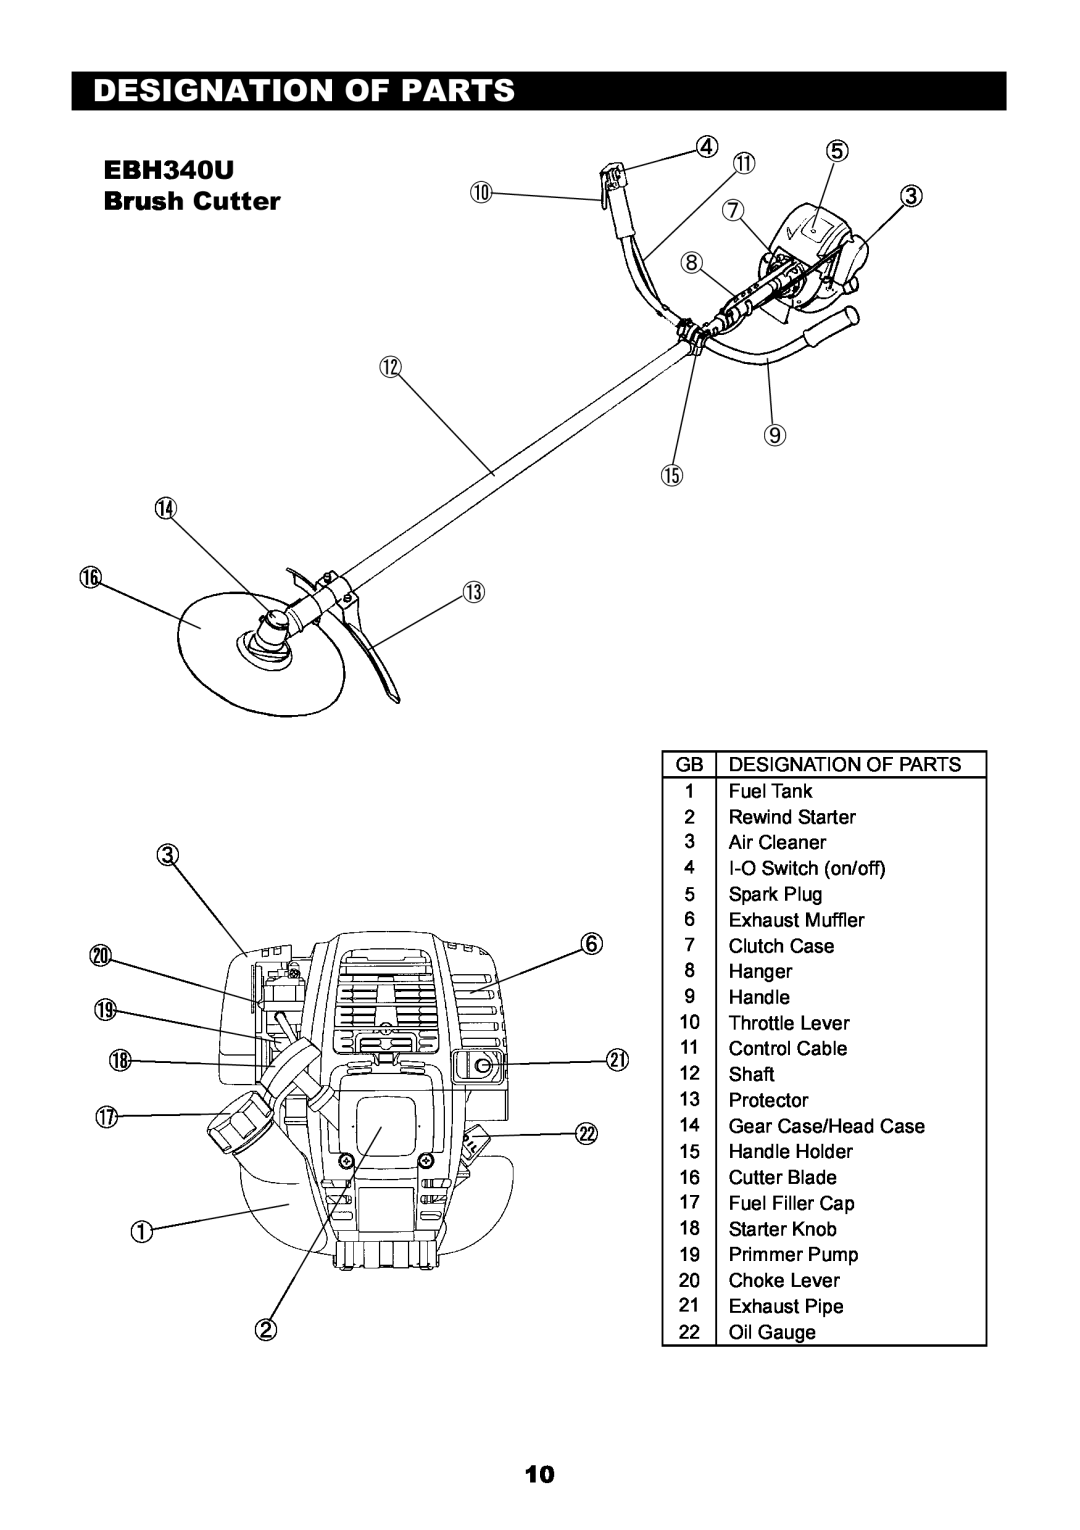 Makita EBH340U instruction manual Designation Of Parts, Brush Cutter 